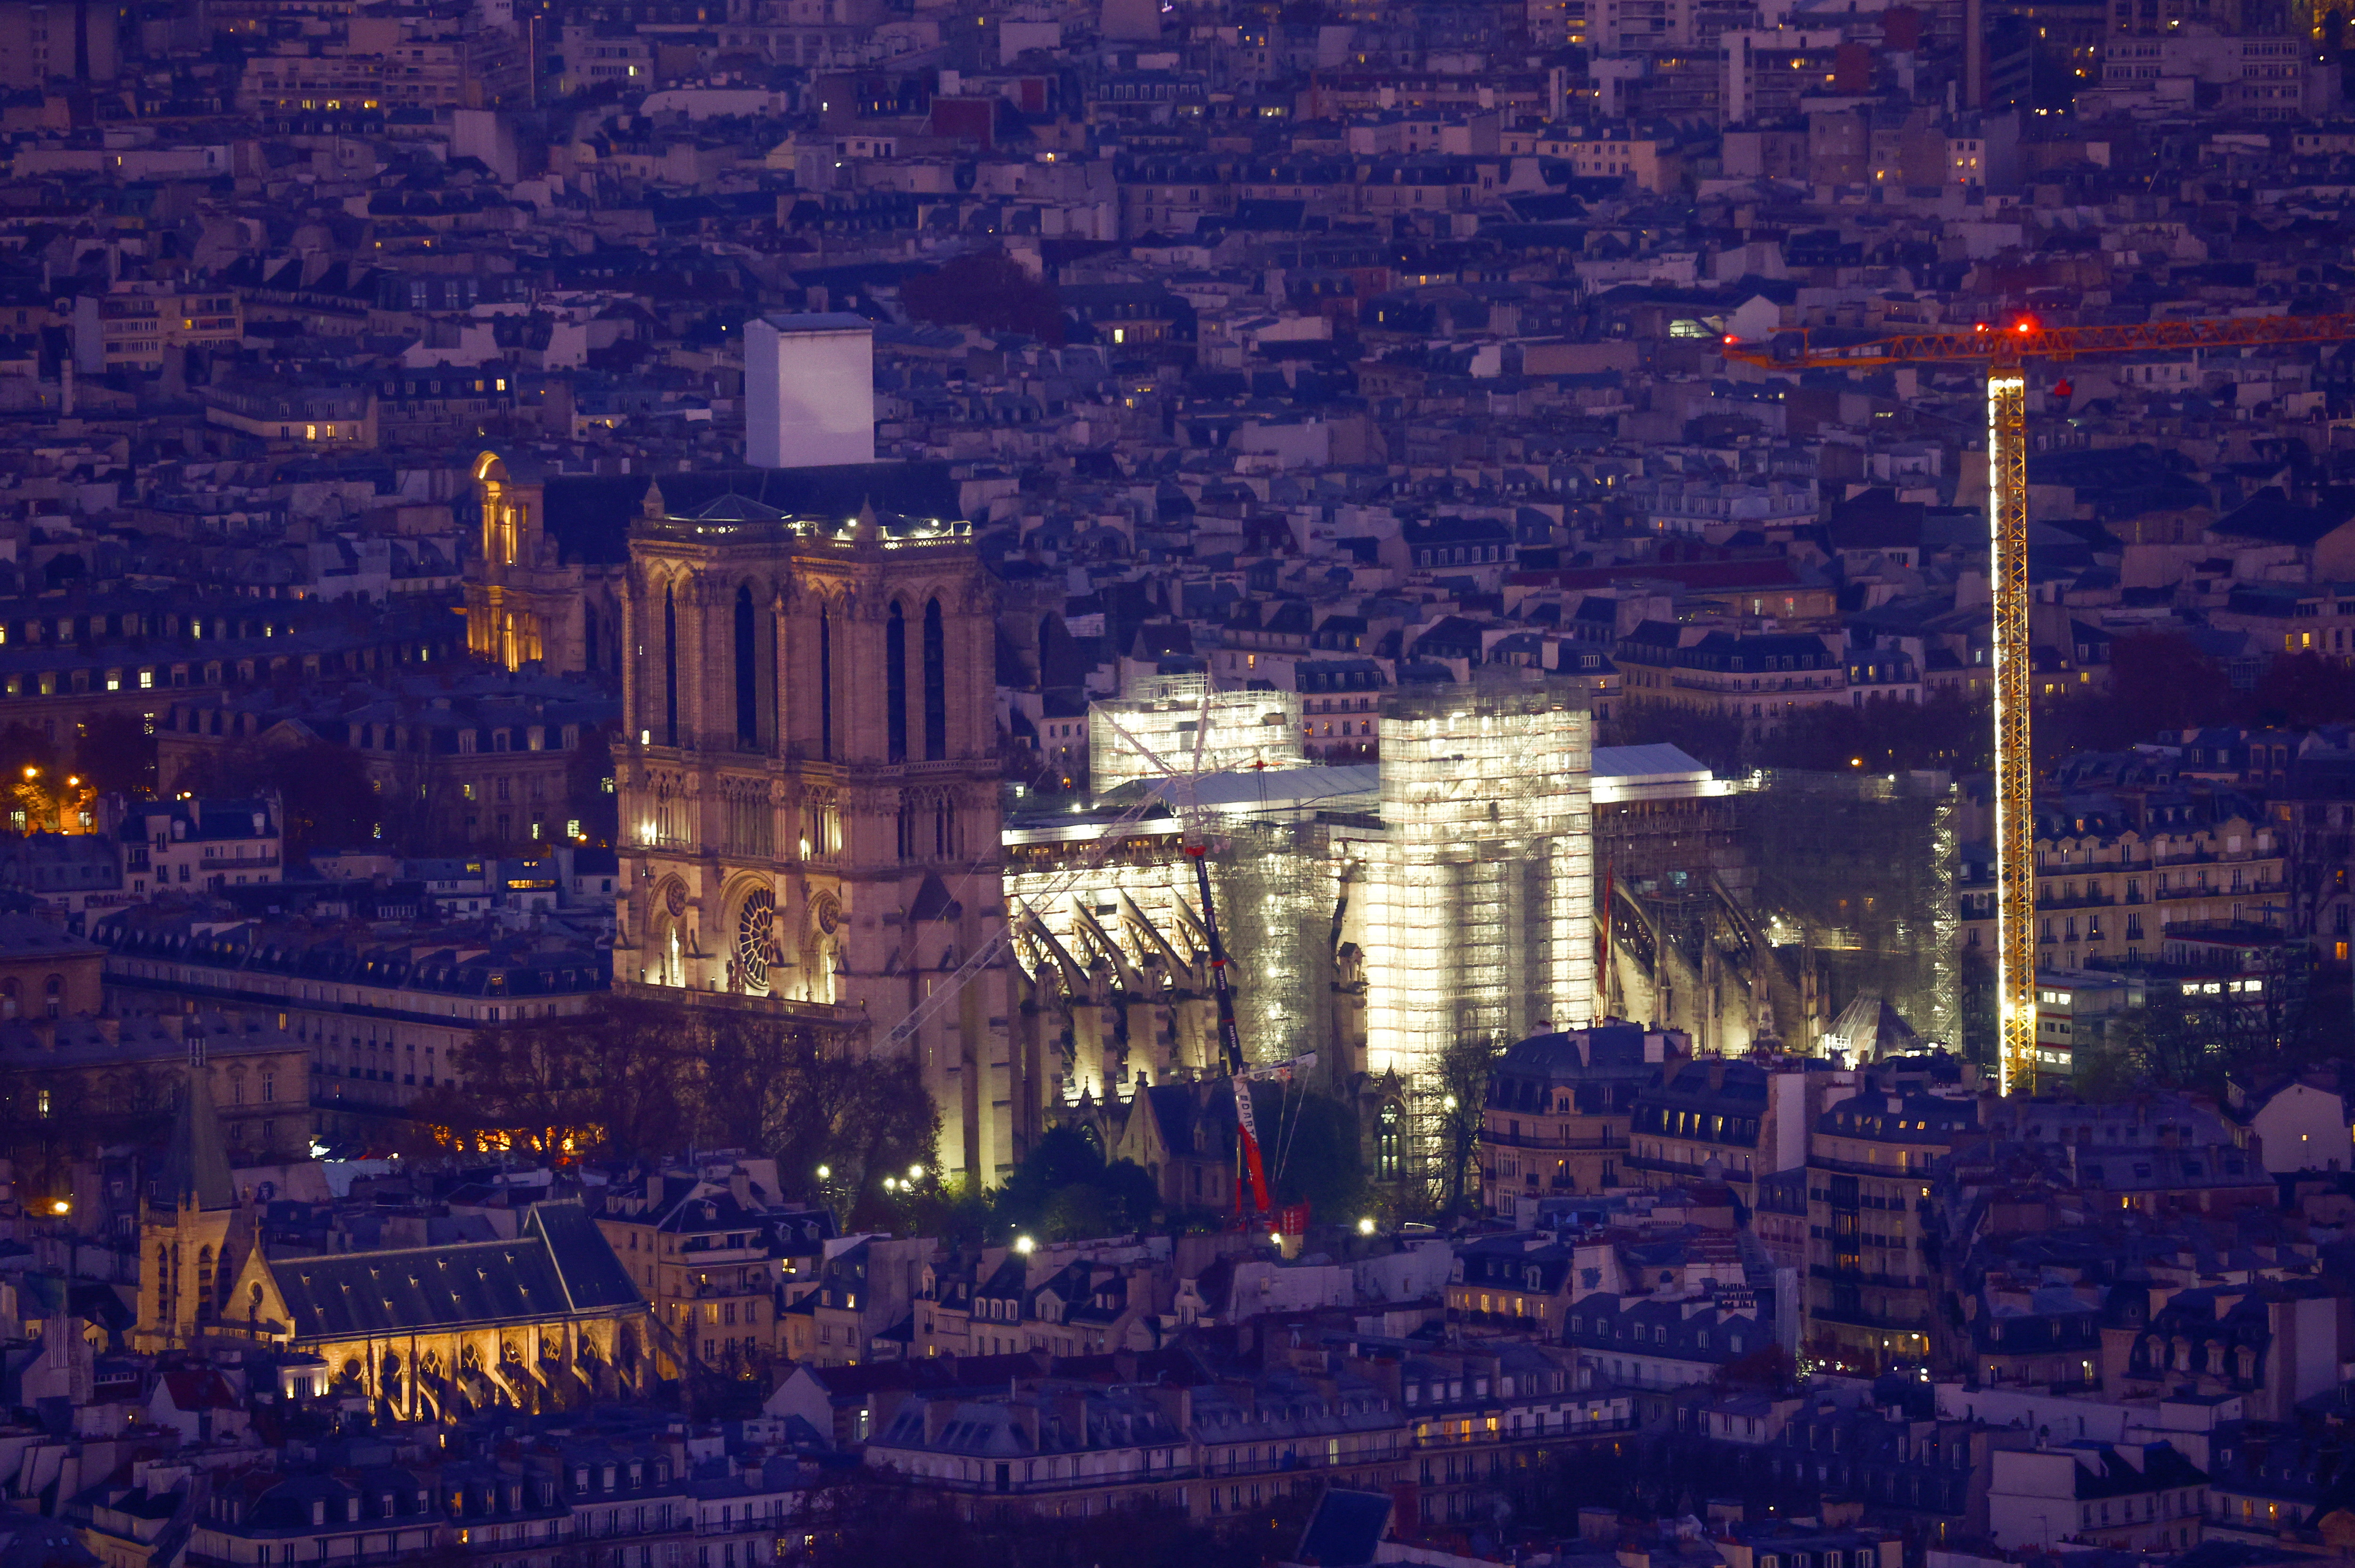 La Catedral de Notre Dame tiene fecha de reapertura confirmada